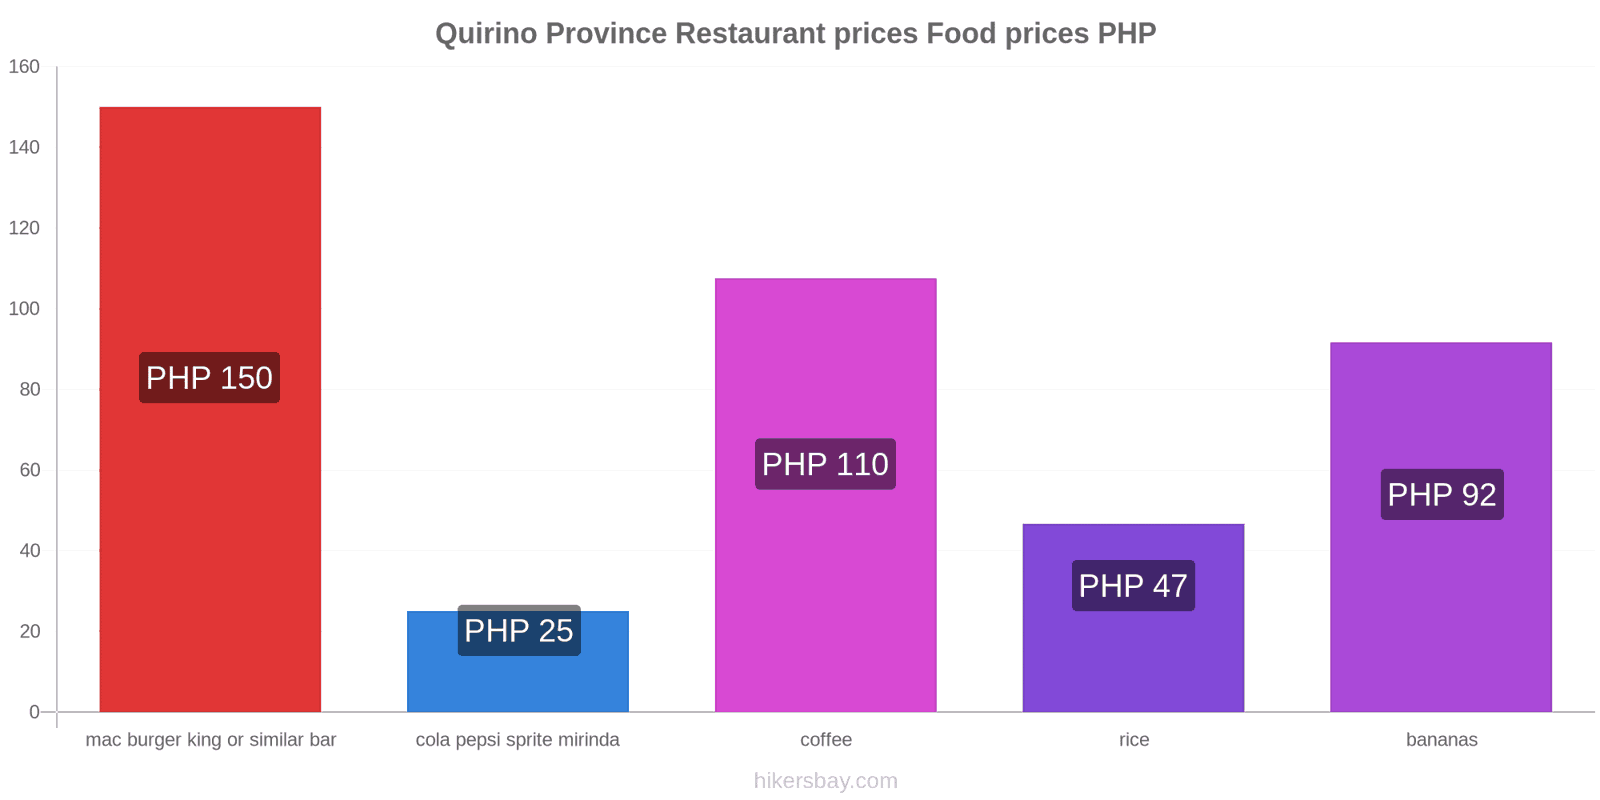 Quirino Province price changes hikersbay.com